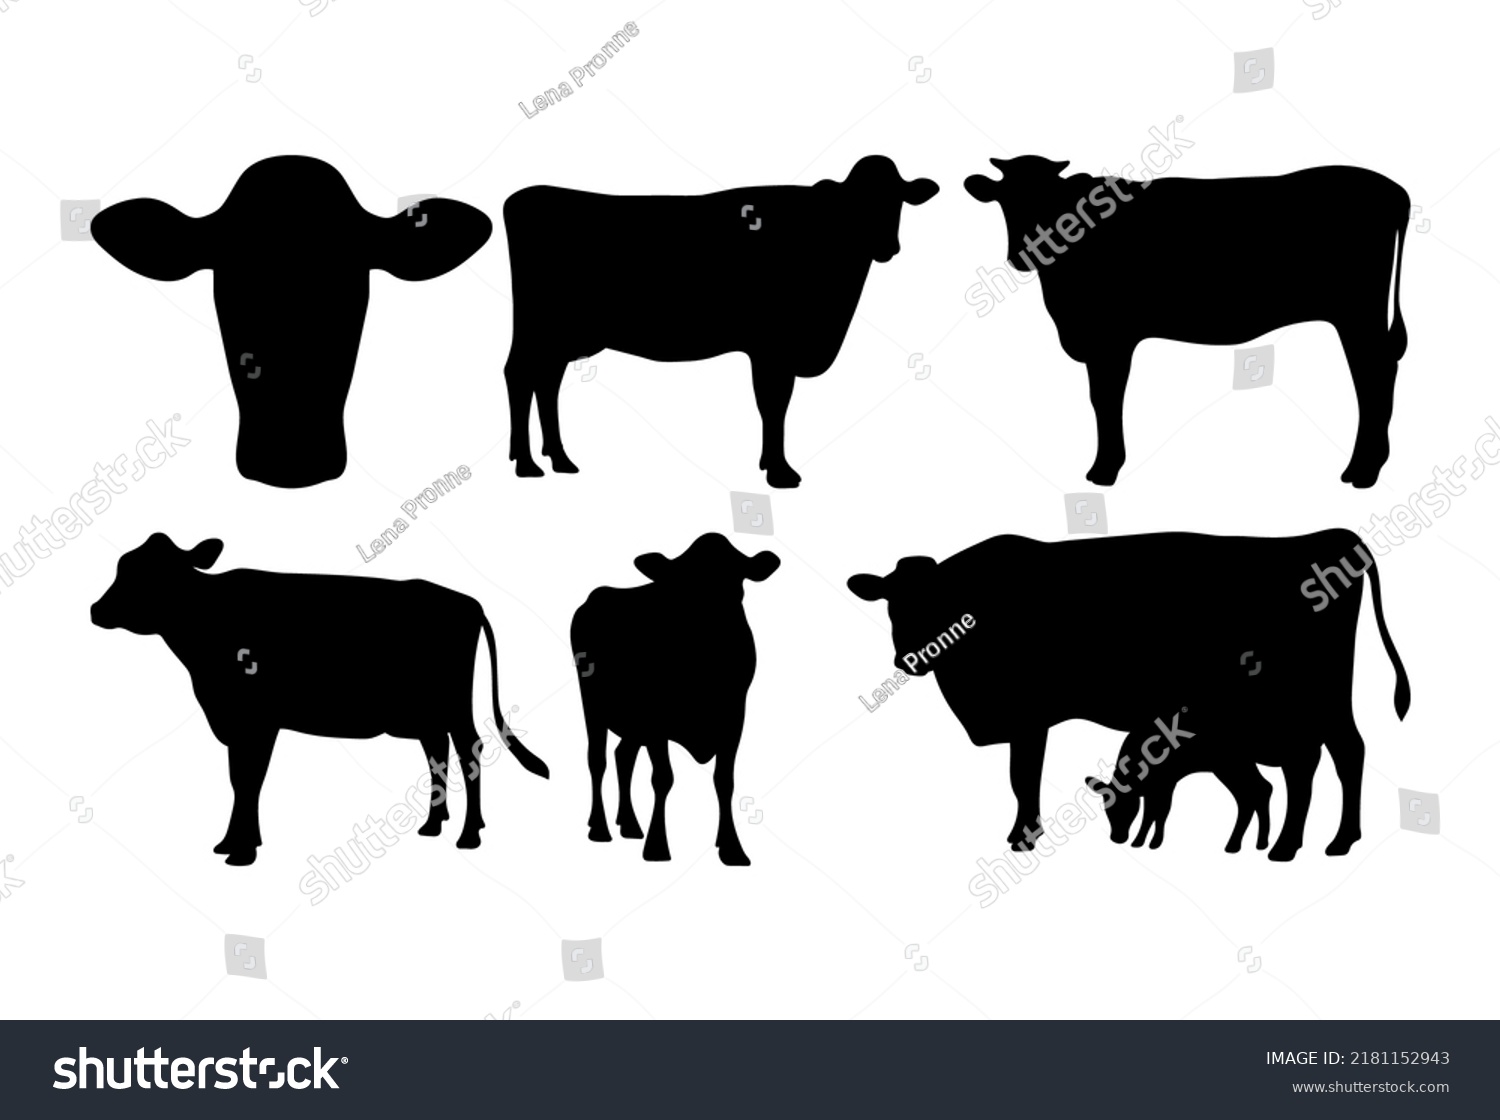 SVG of Cow illustration bundle isolated on white background svg